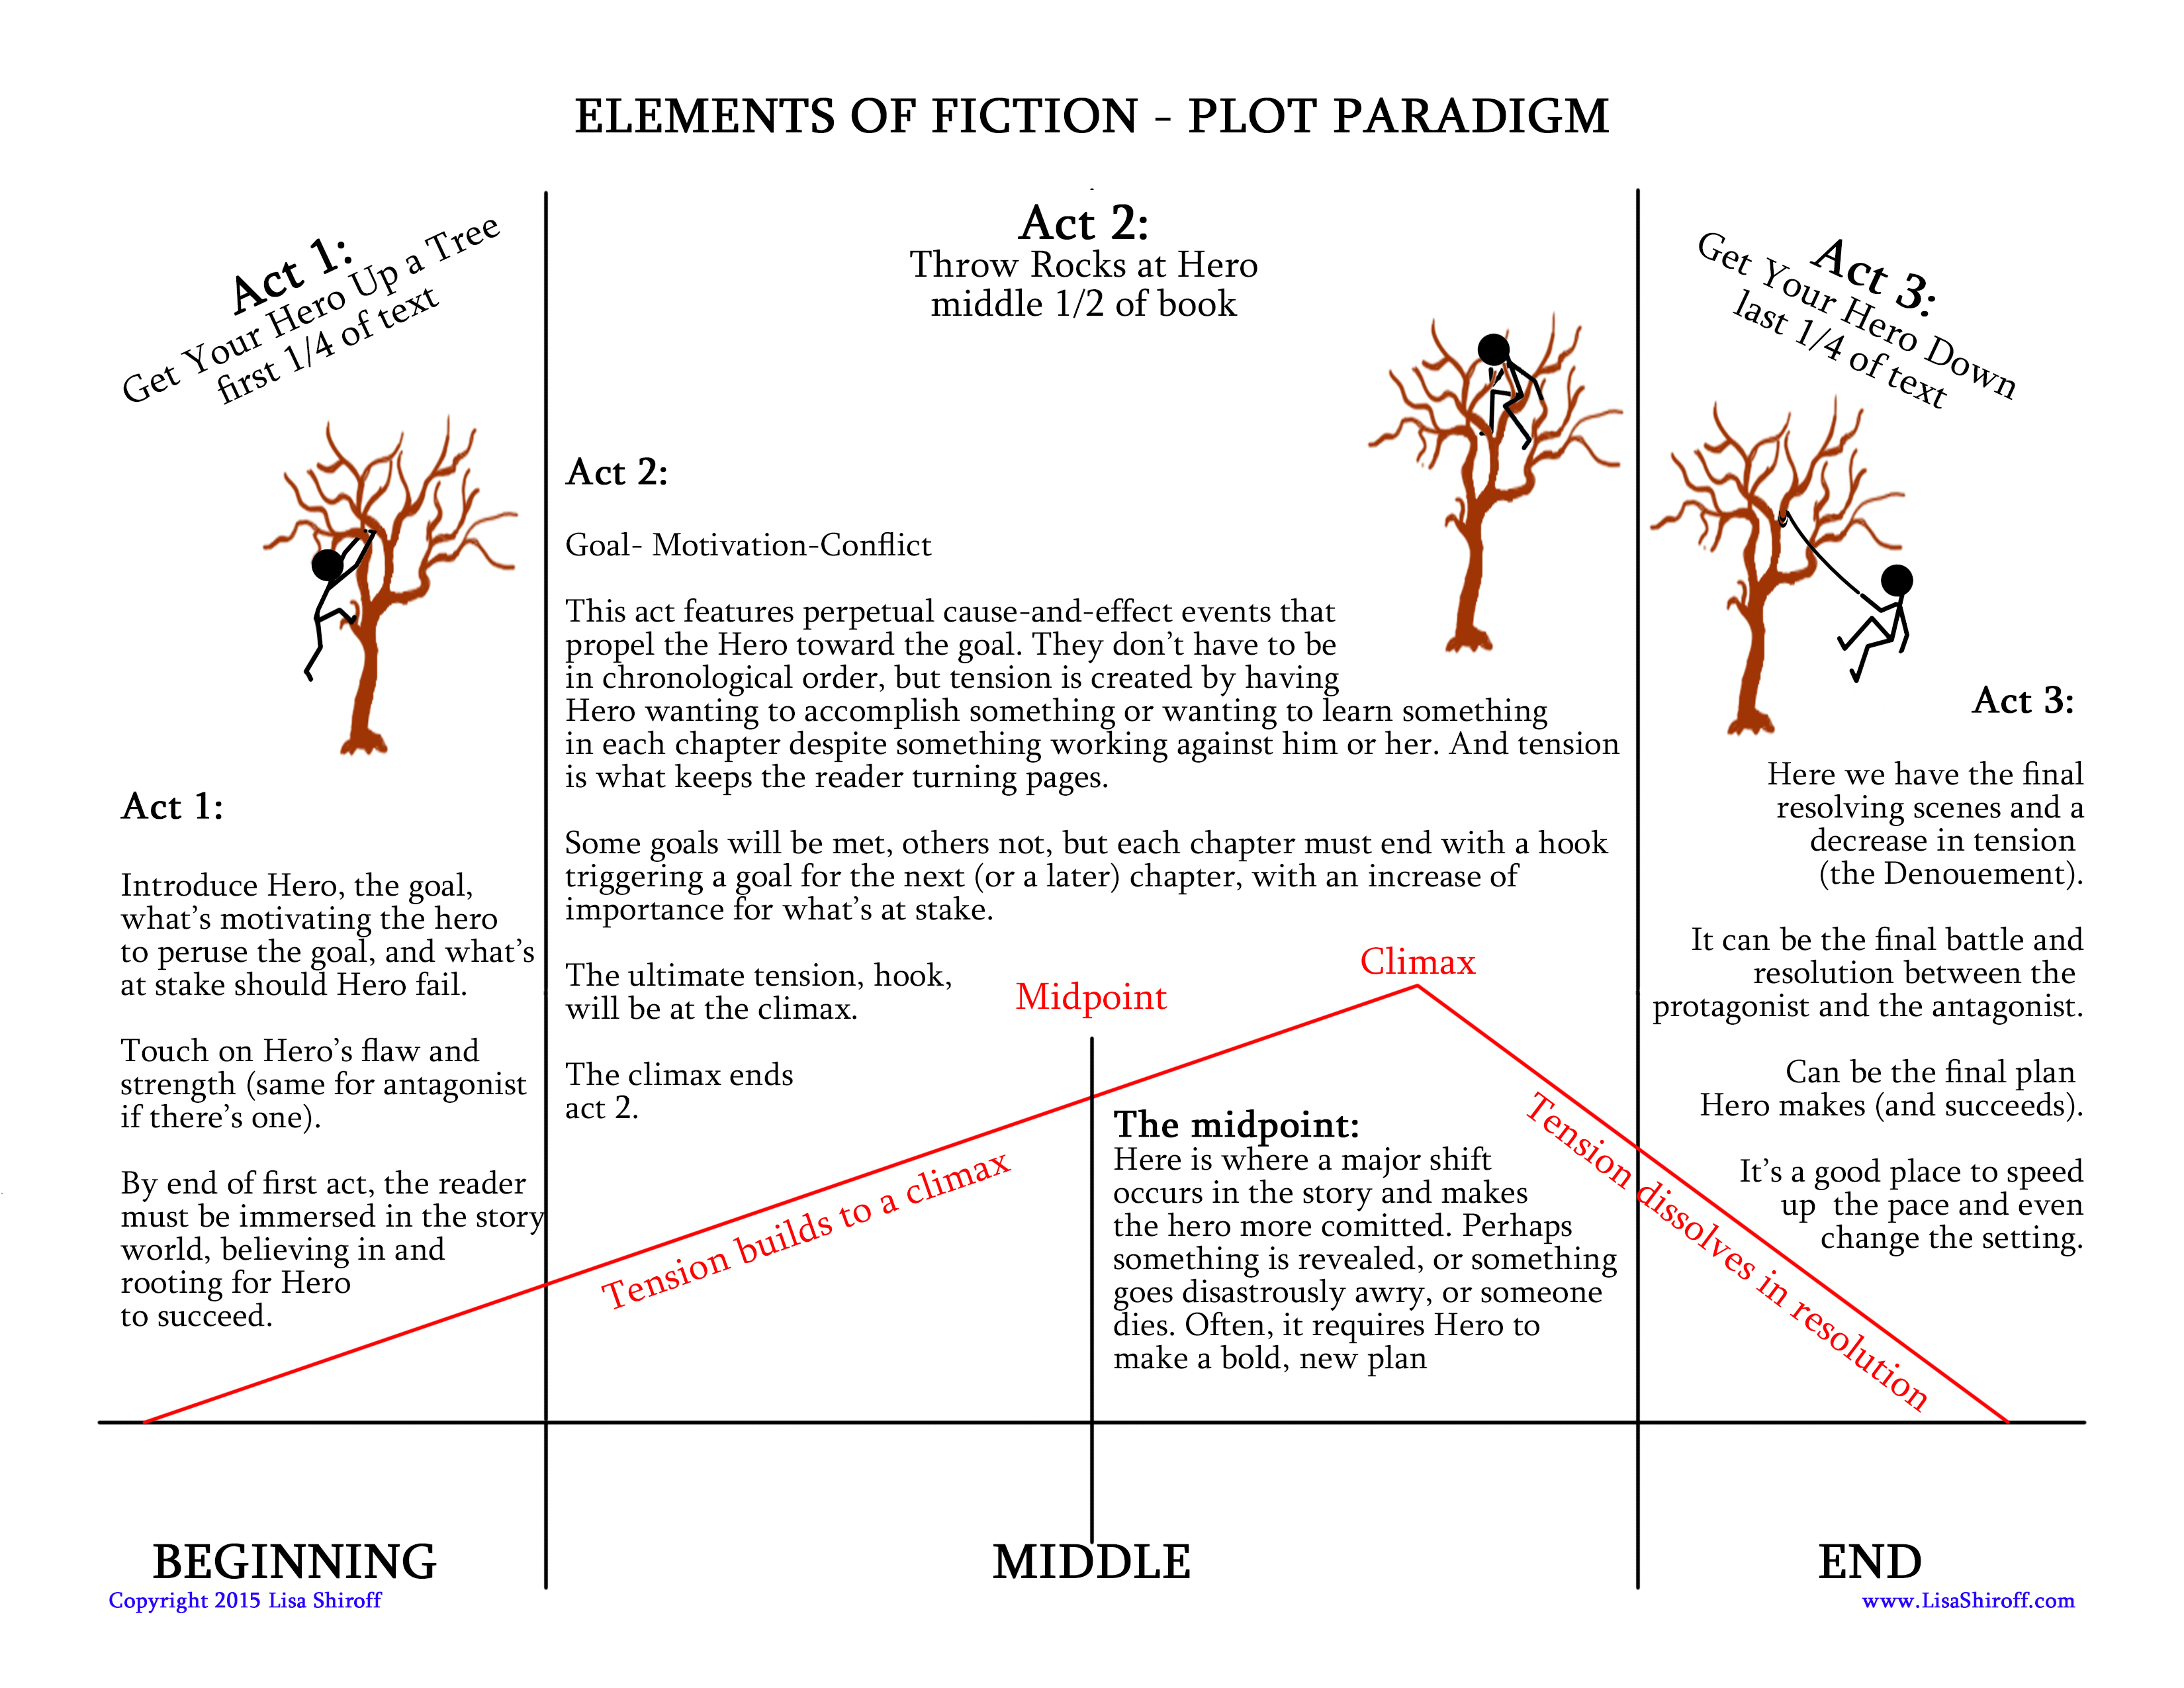 Fiction paradigm